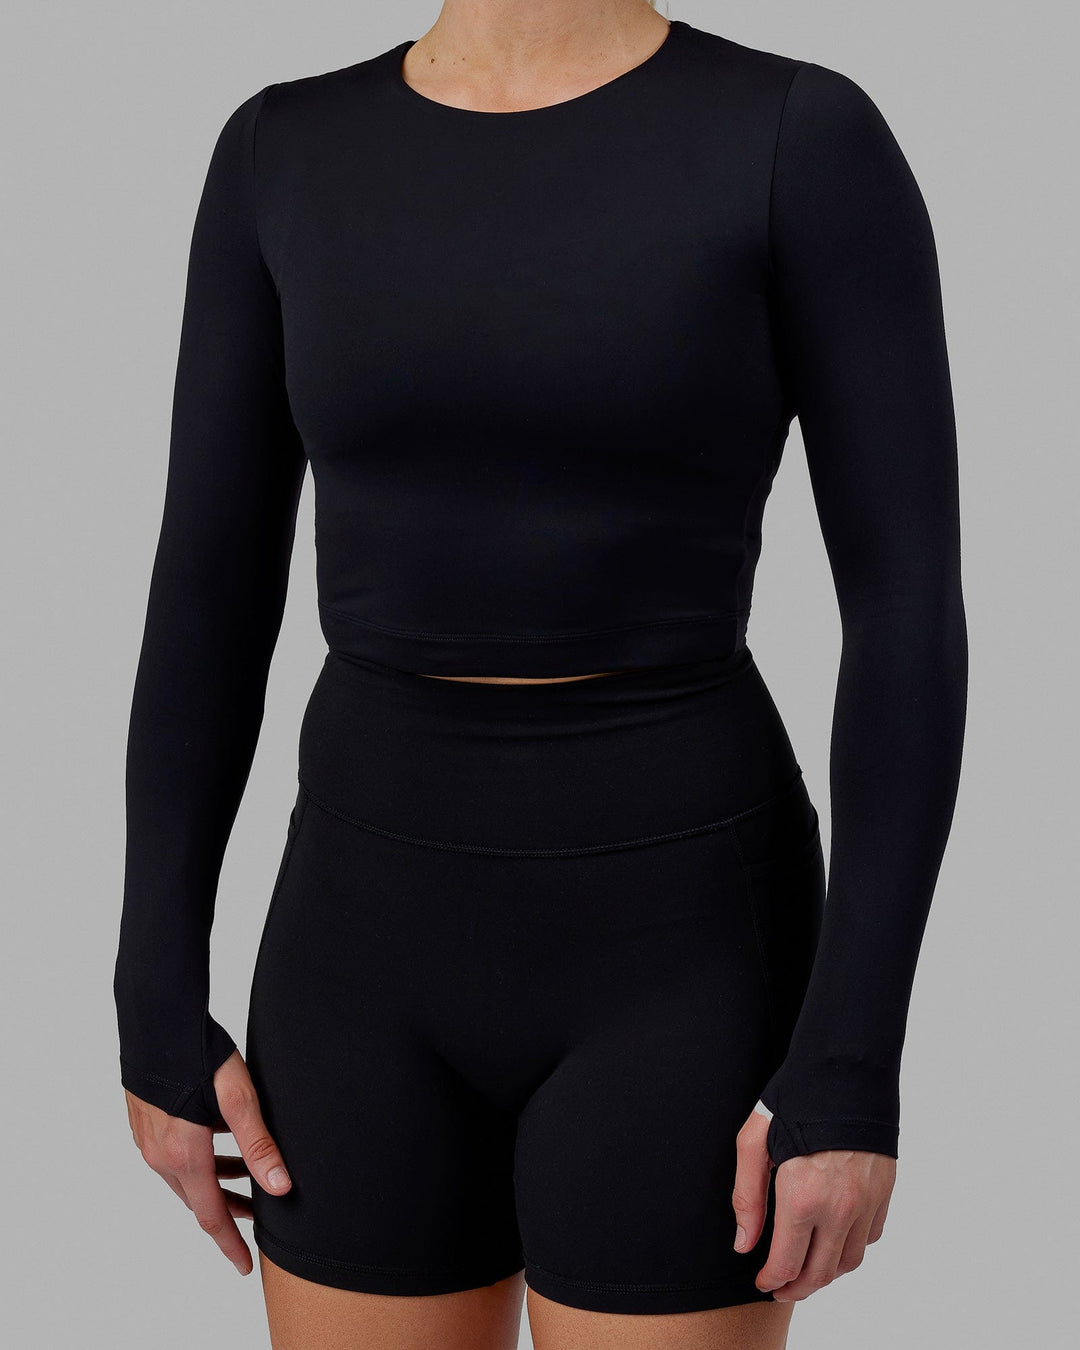 Woman wearing Staple LS Cropped Tee - Black